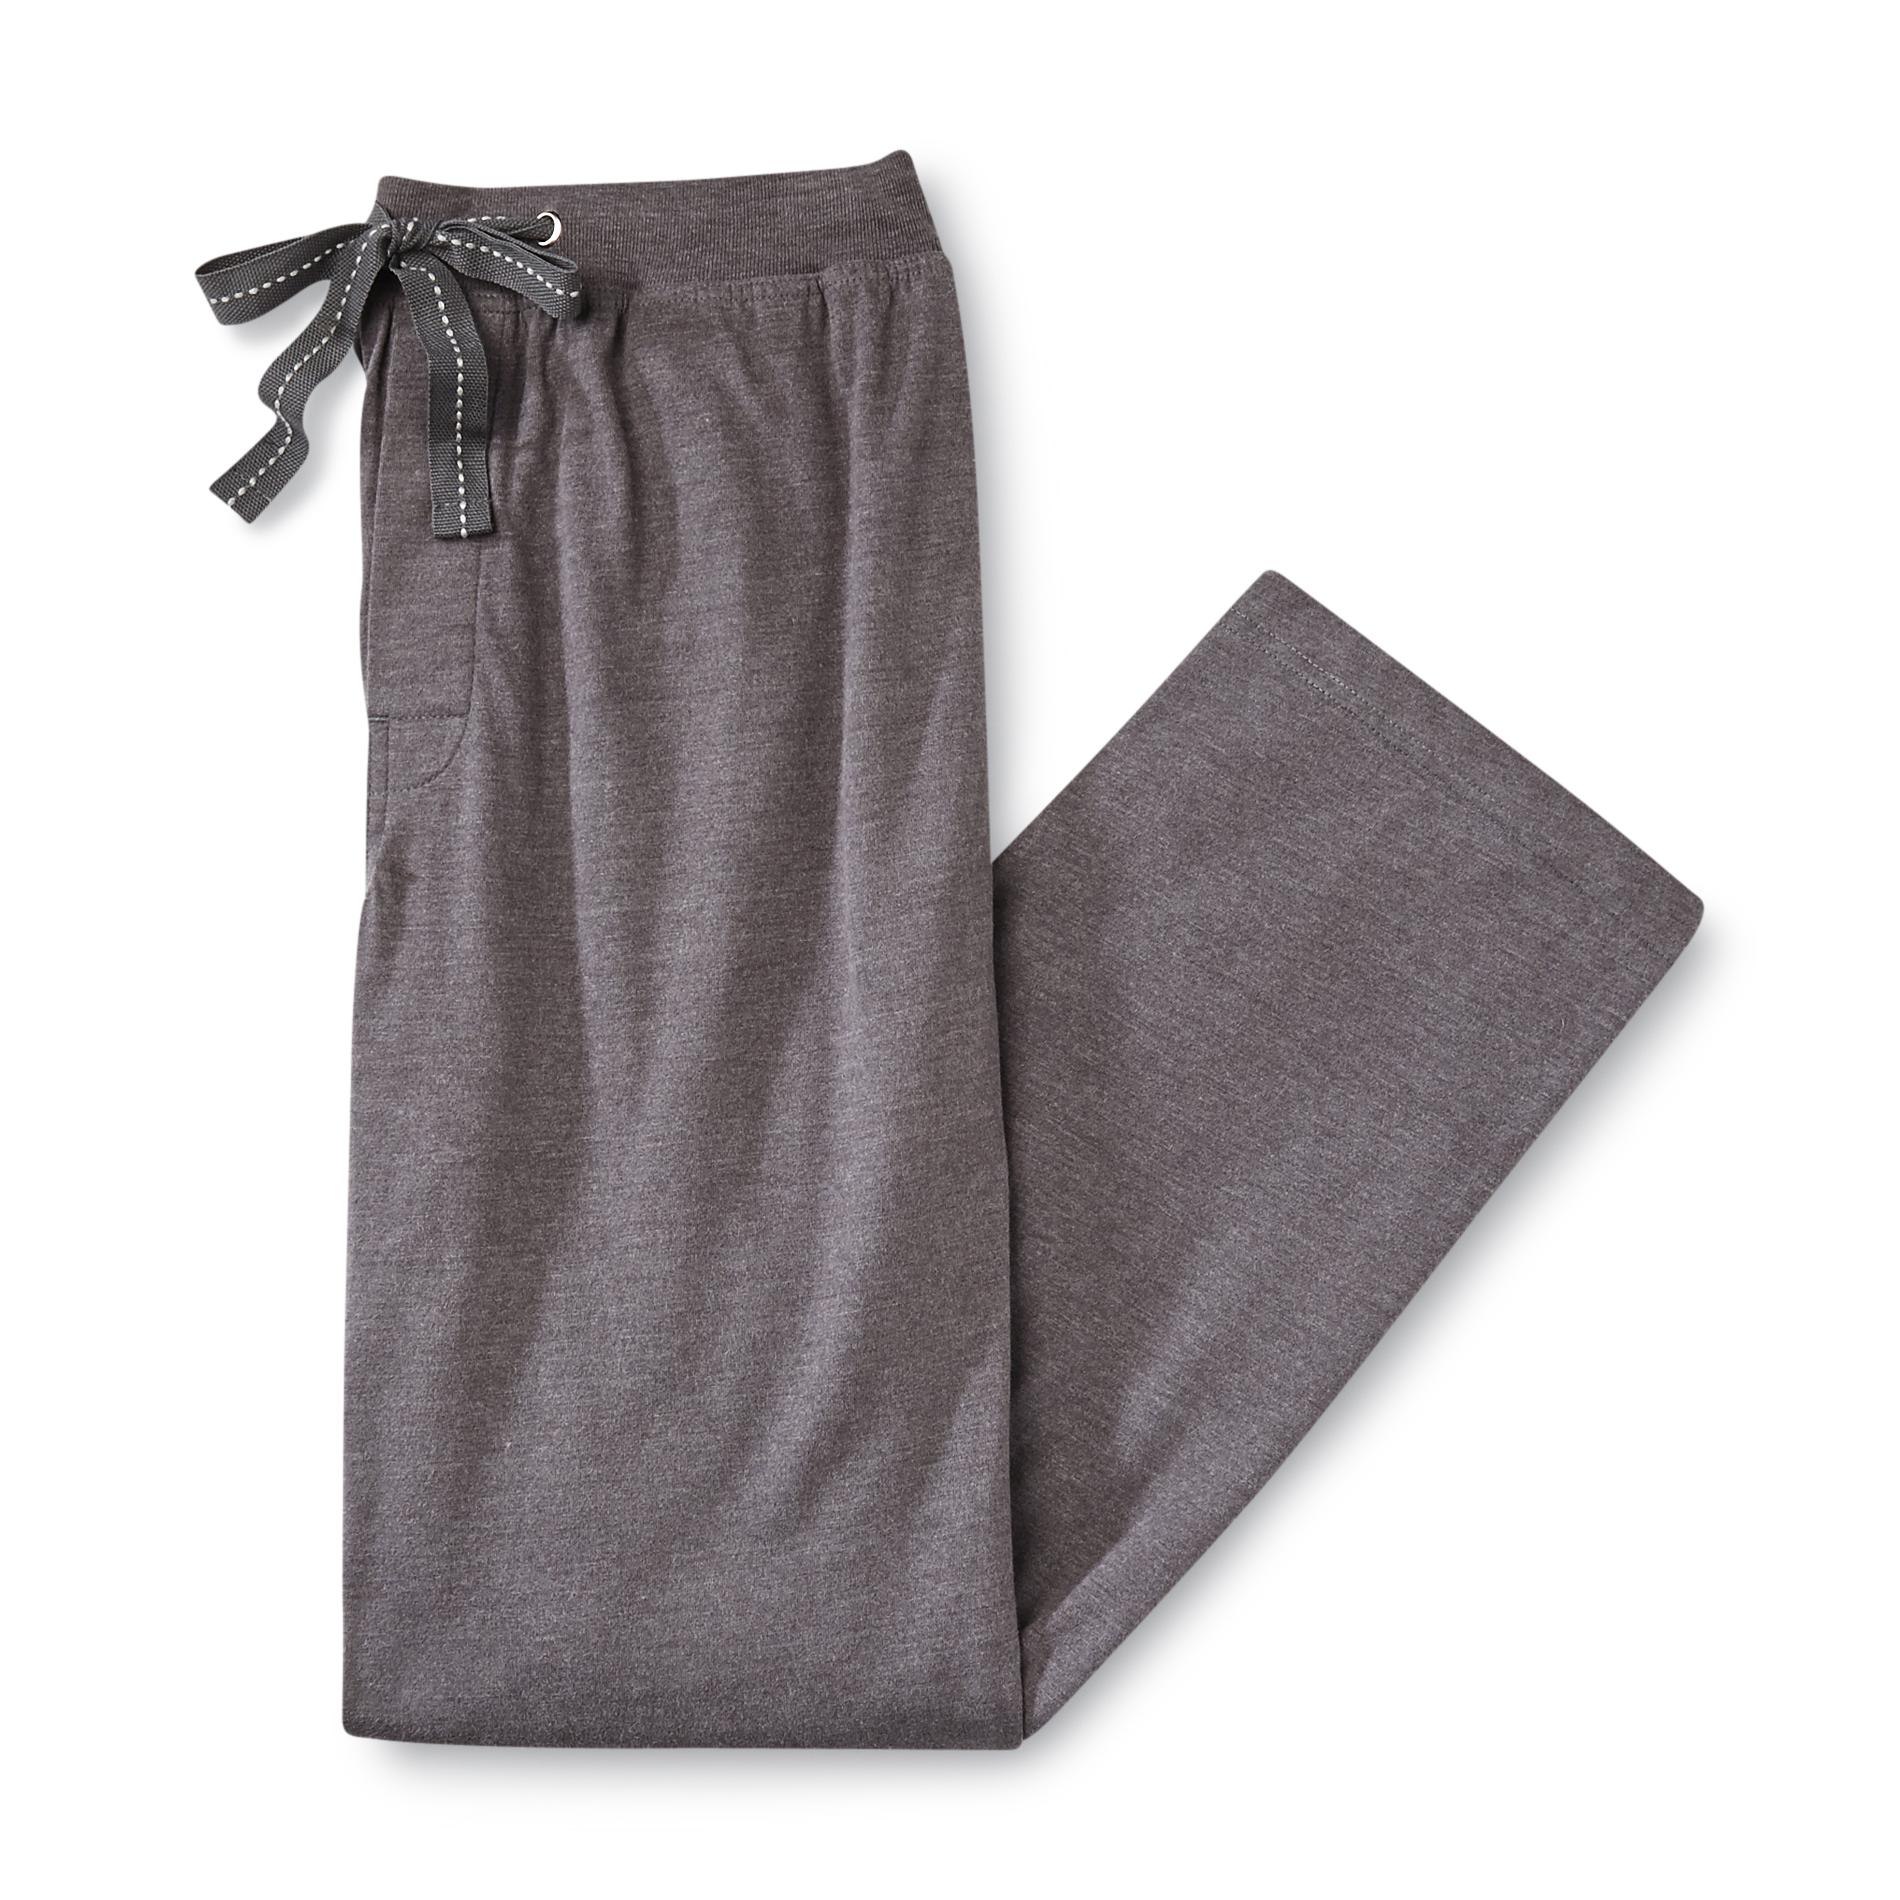 Joe Boxer Men's Pajama Pants - Sueded Knit